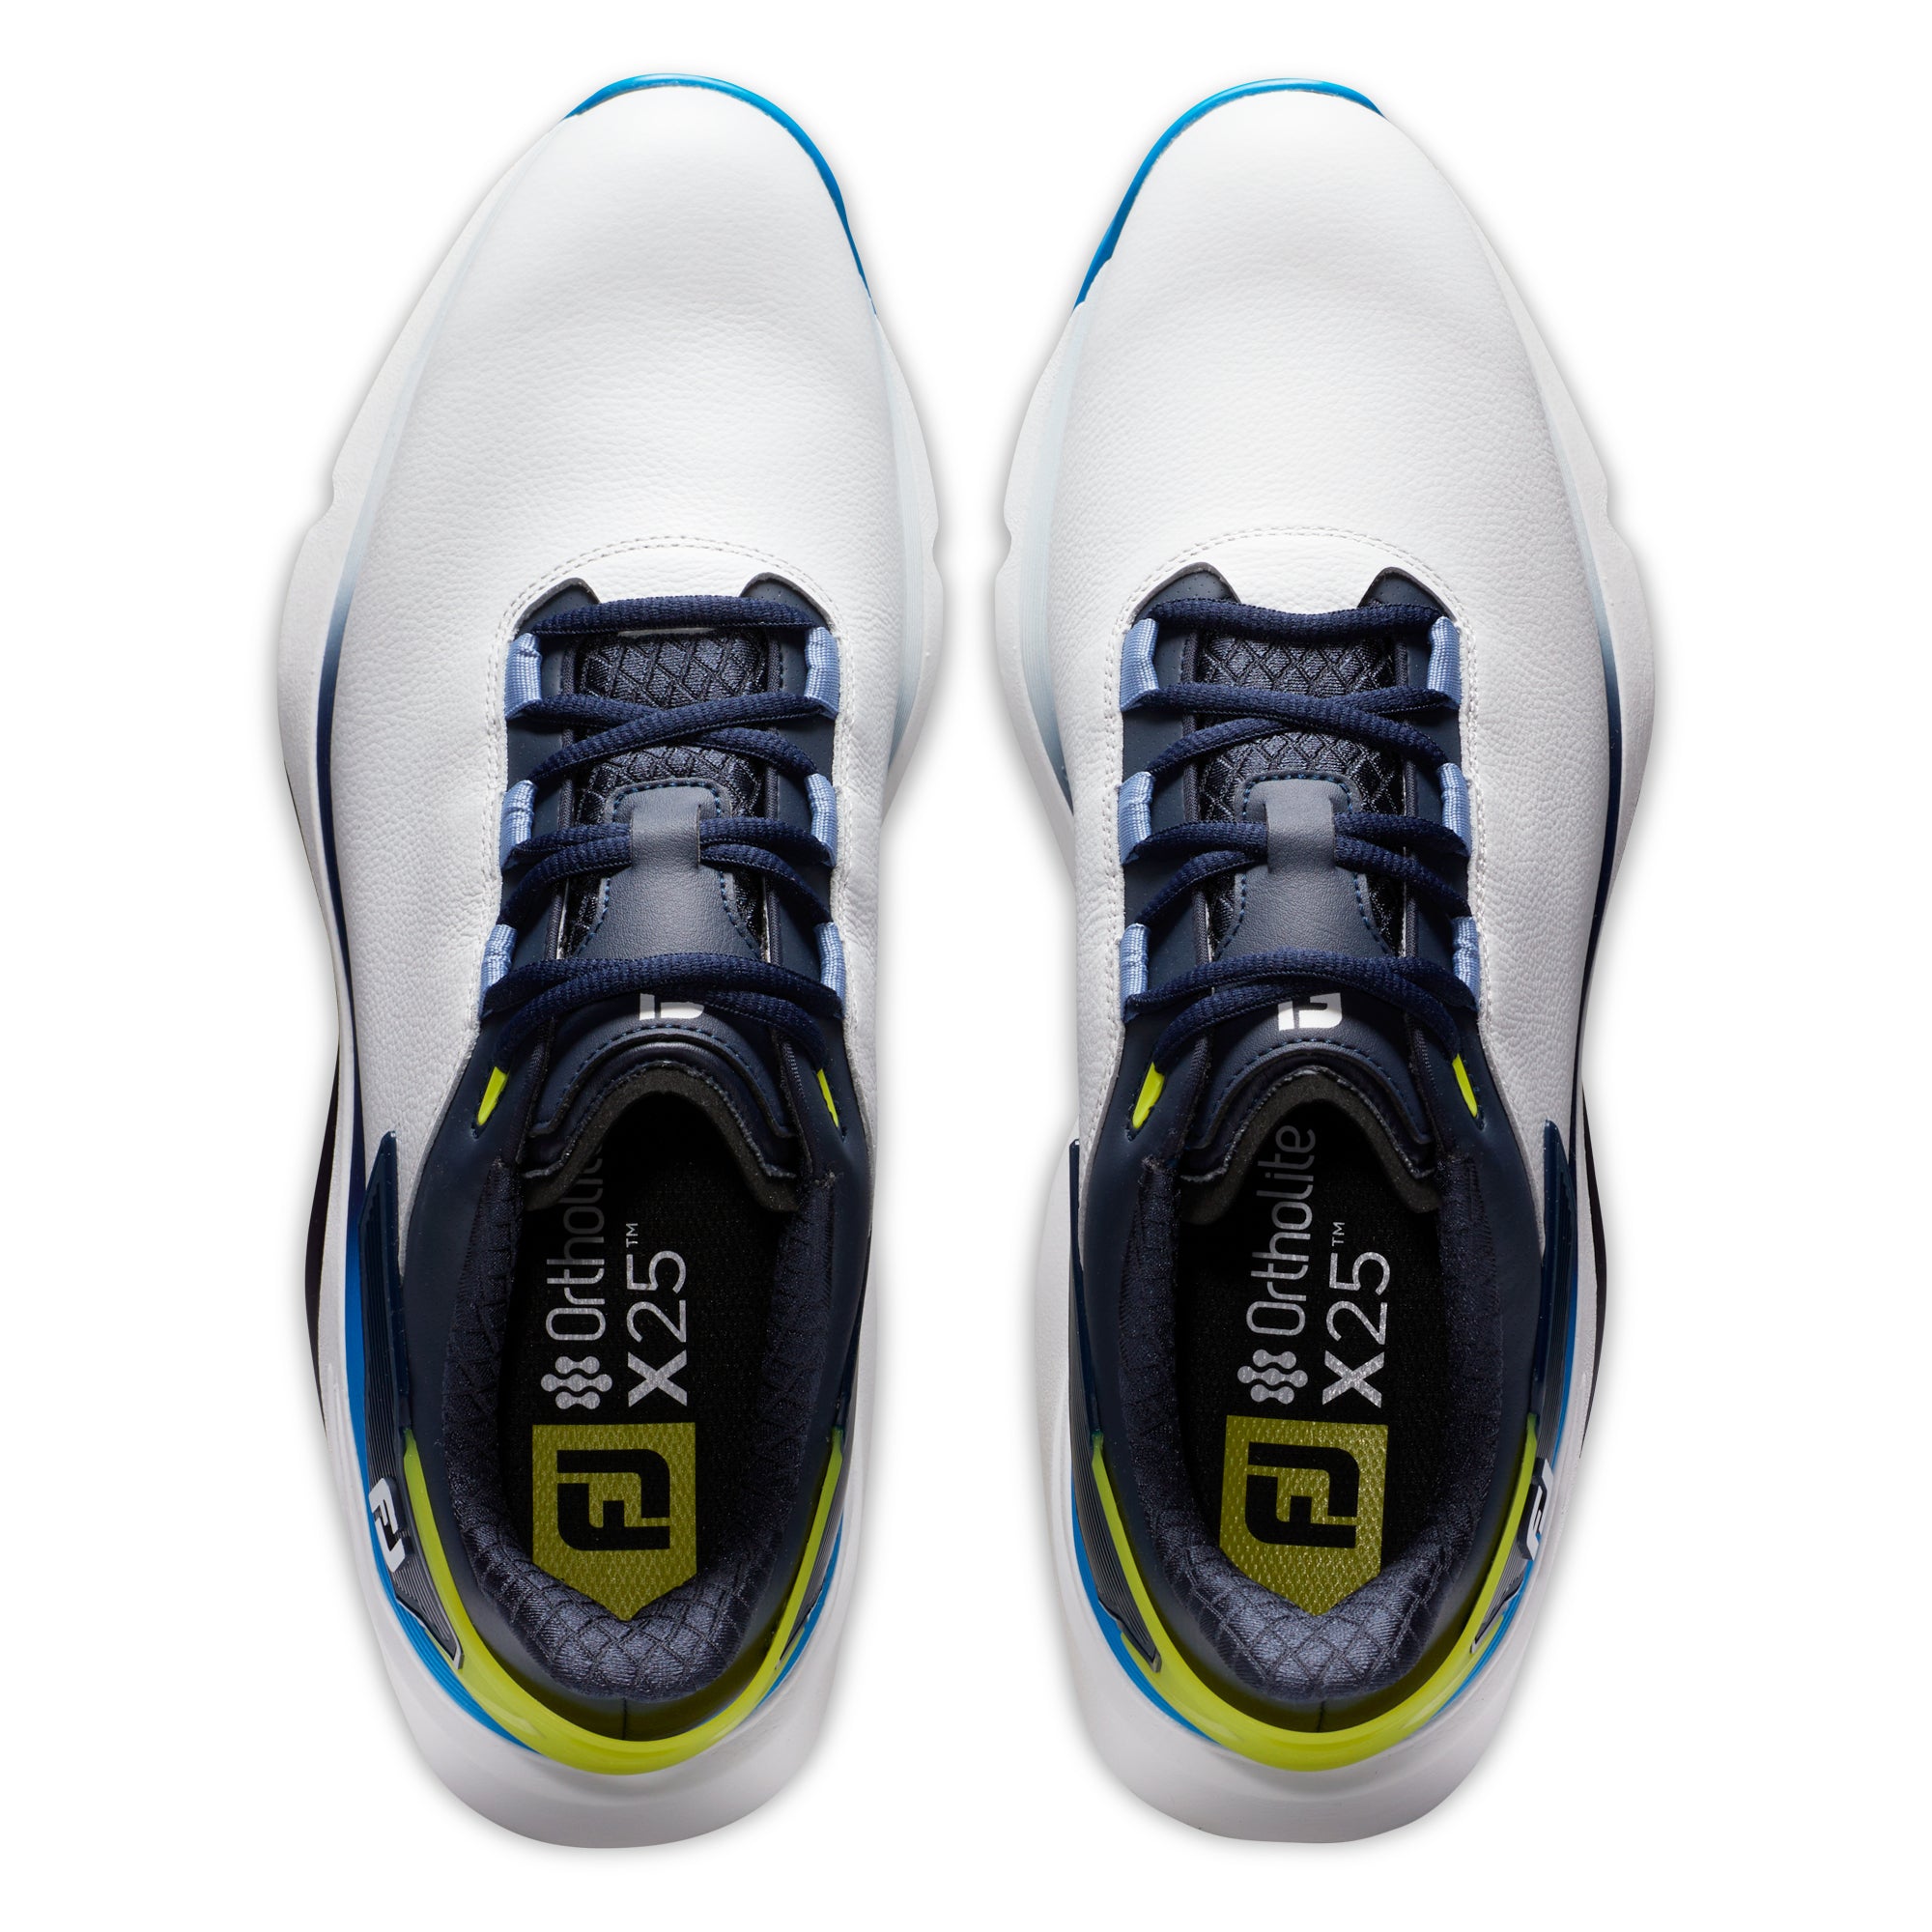 footjoy-pro-slx-golf-shoes-56914-white-navy-blue